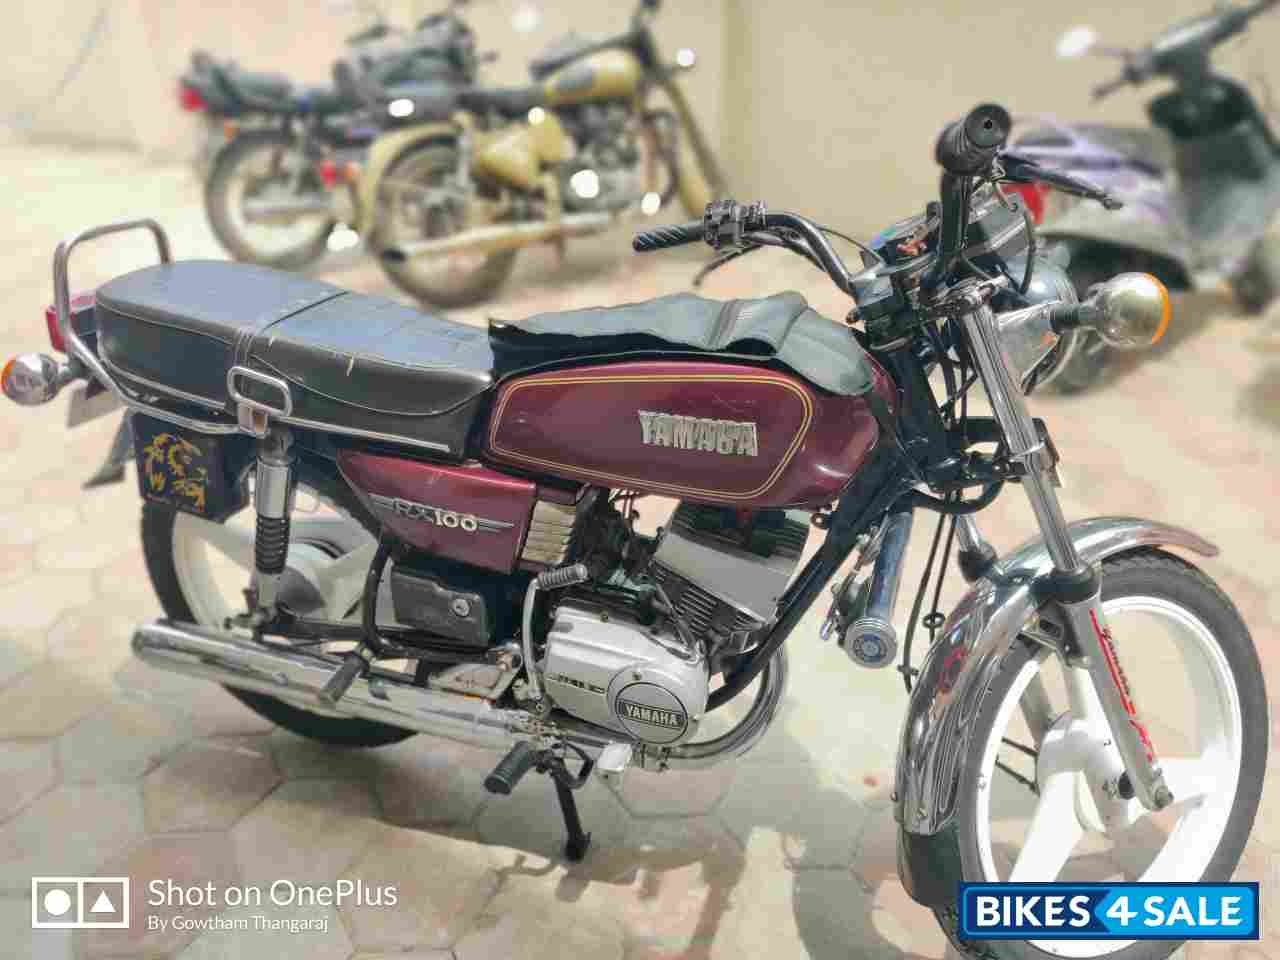 Yamaha Rx 100 Bike Price In Chennai